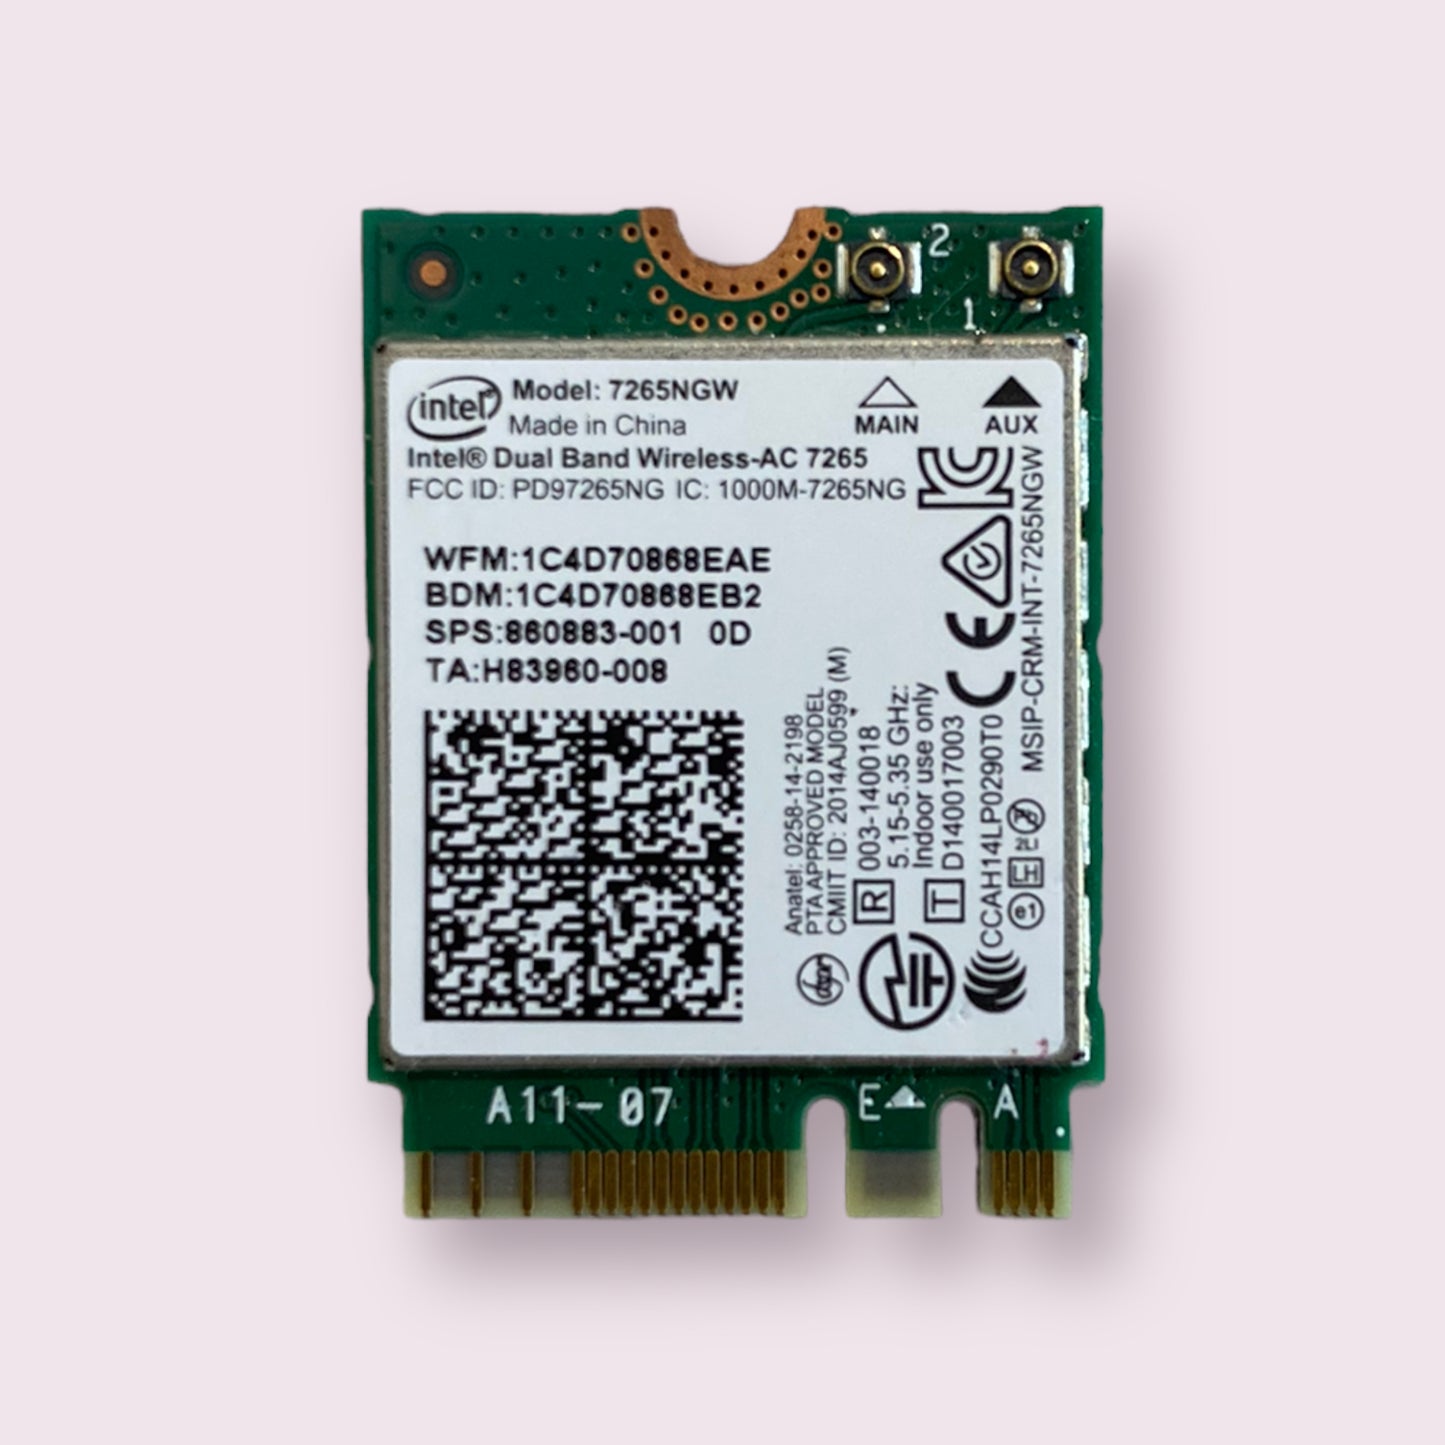 HP Envy 13 AD 13-AD Series WIFI Card Intel 7265NGW- Genuine Pull Part